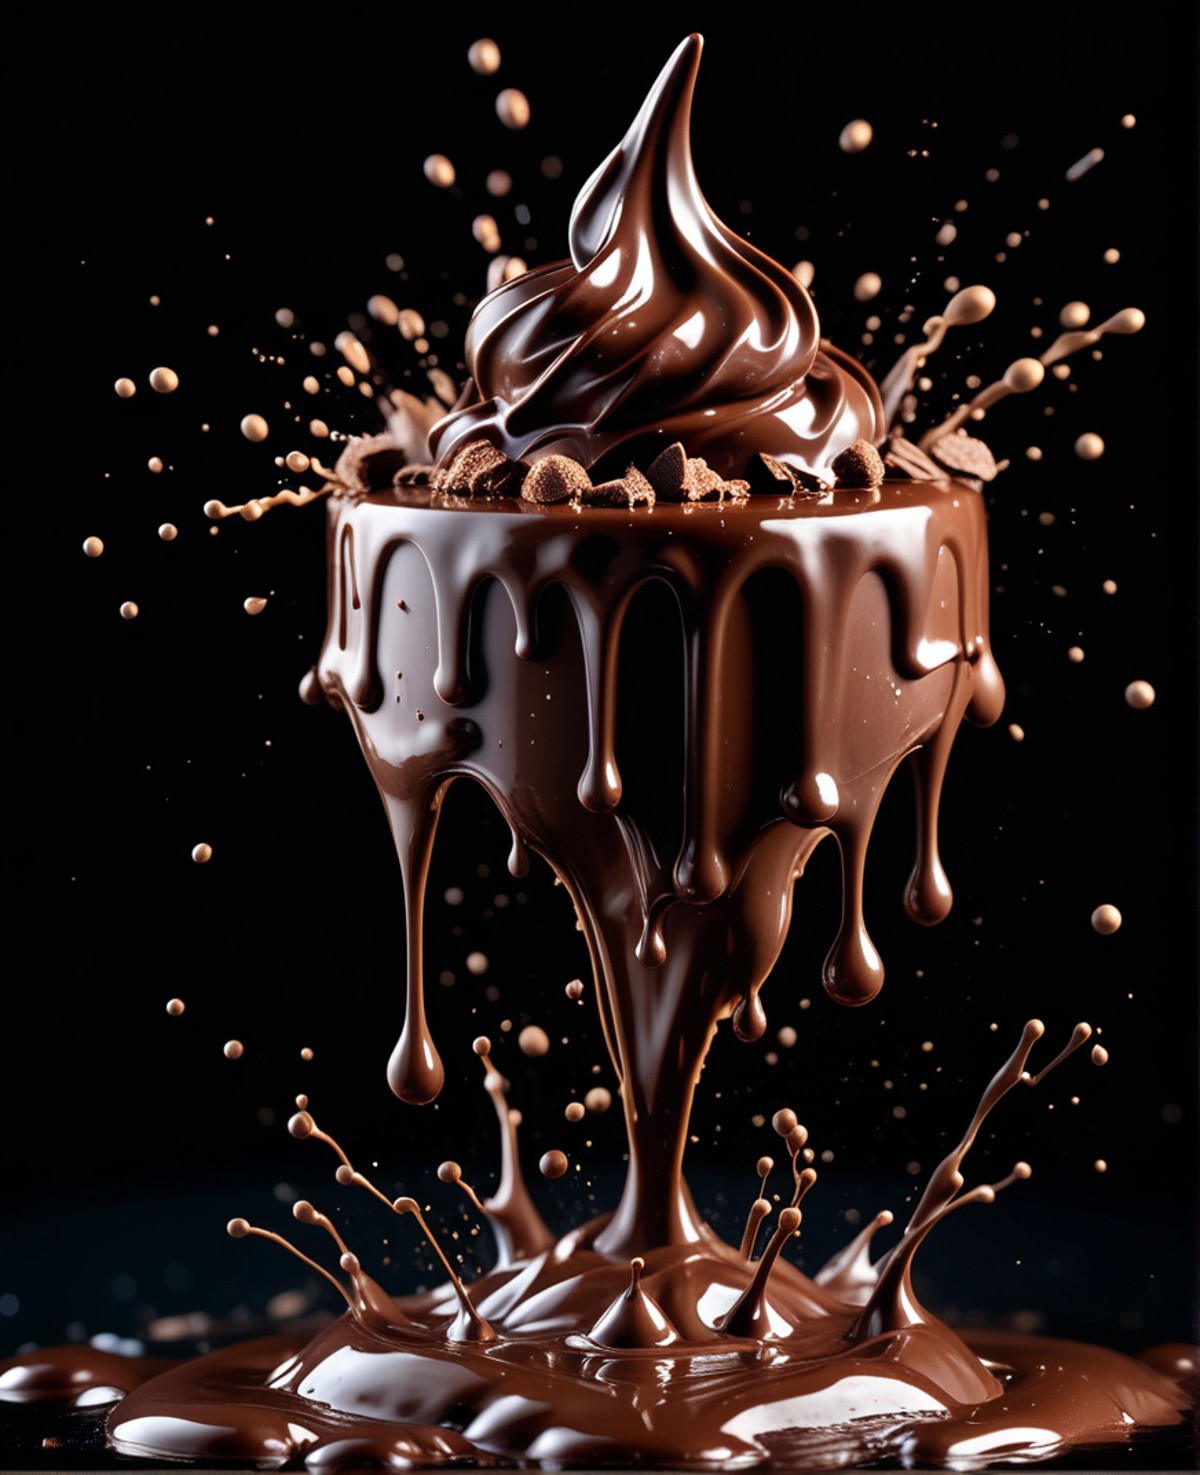 cake, chocolate, liquid splashes, merging, melting, splashing, droplets, mixing, fading away, exploding, swirling, intrica...